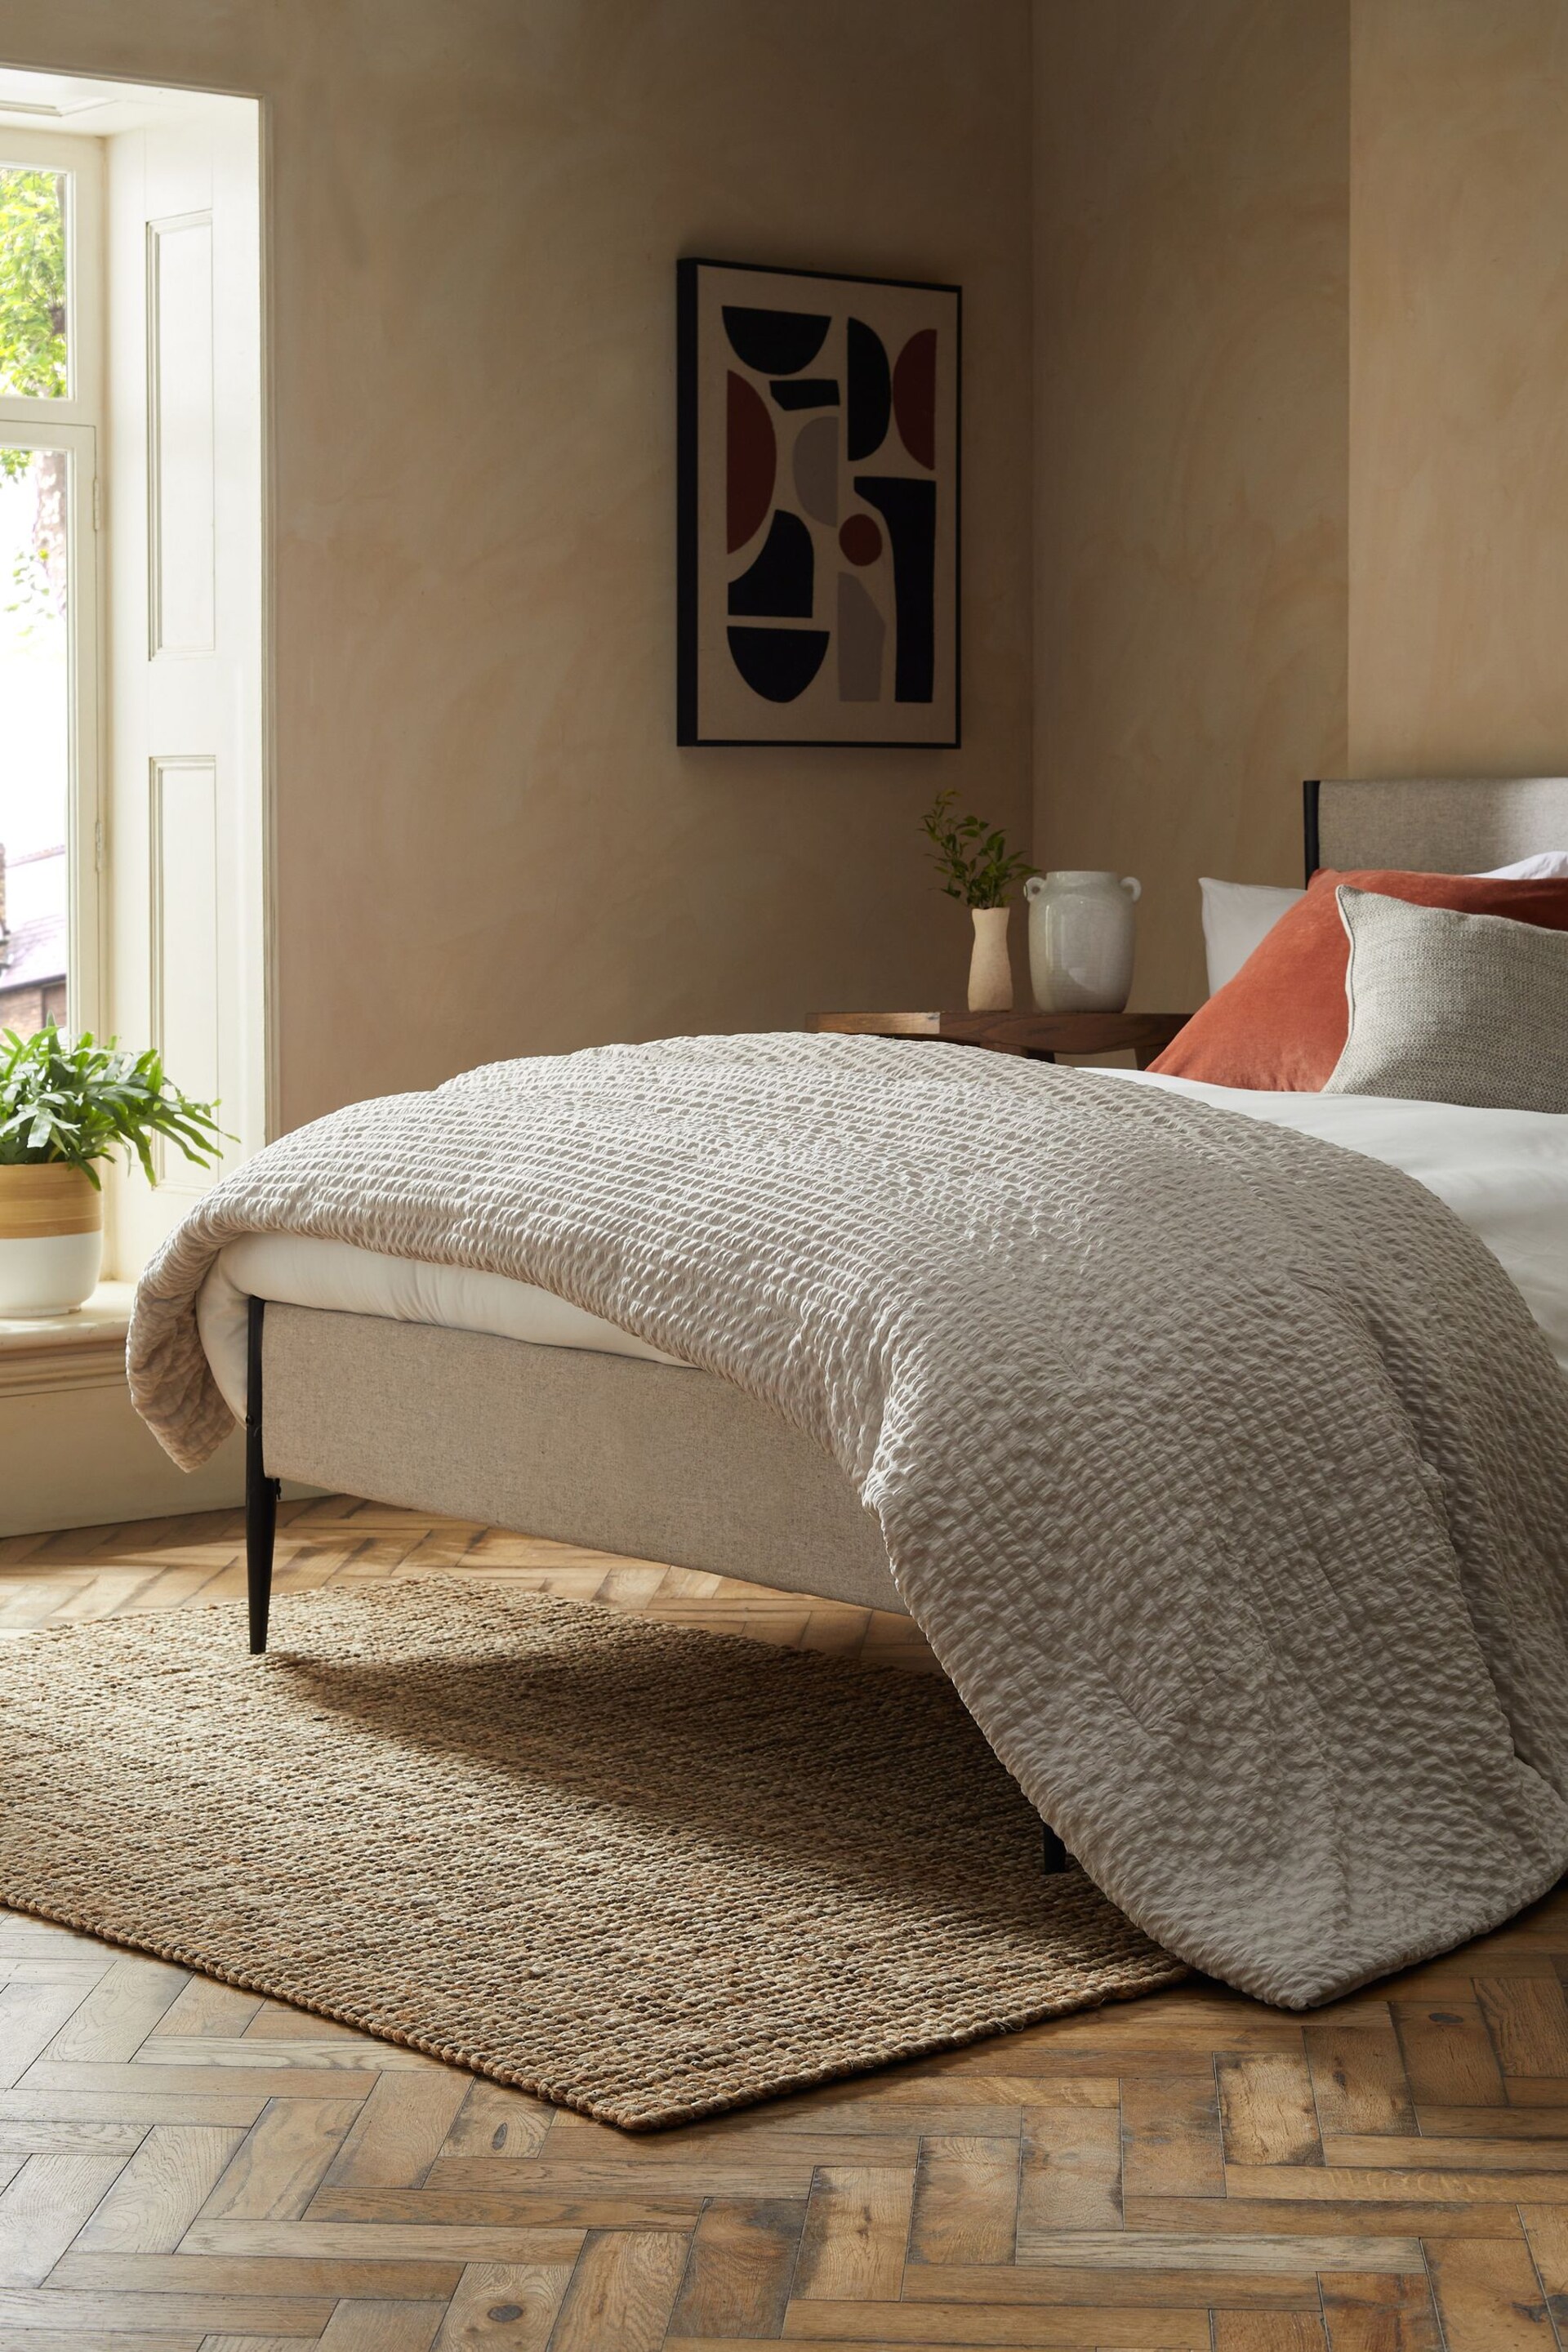 Natural Crinkle Textured Bedspread - Image 1 of 3